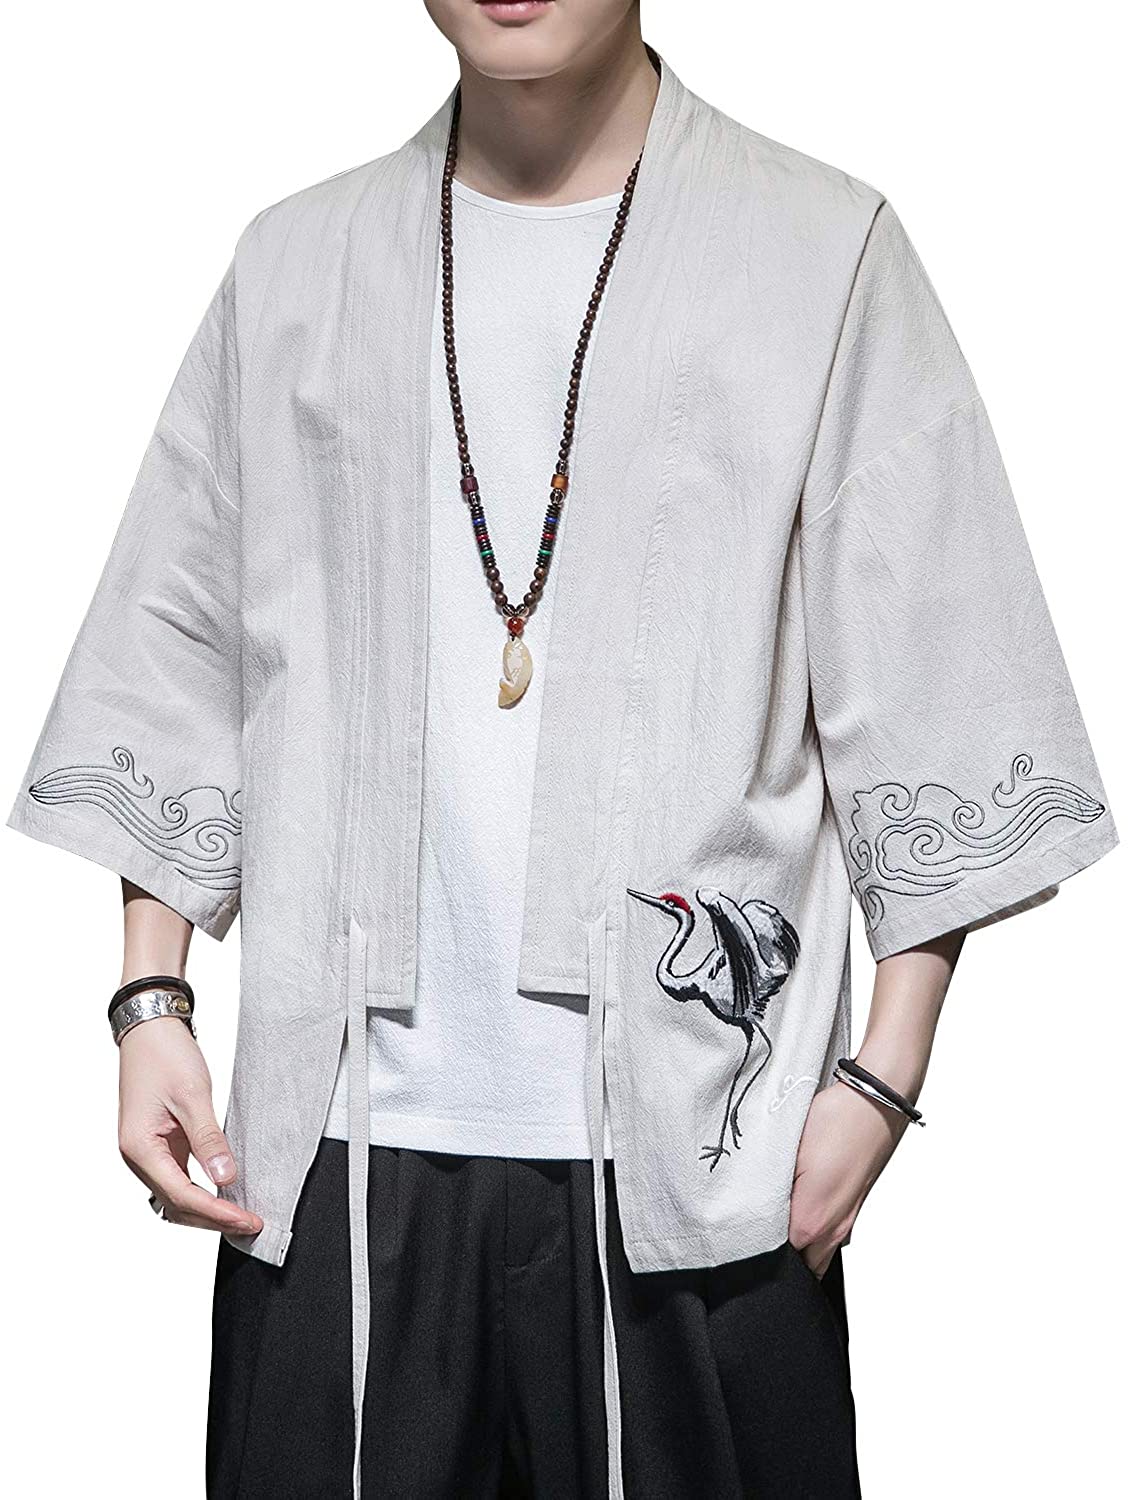 PRIJOUHE Men's Kimono Jackets Cardigan Lightweight Casual Cotton Blends ...